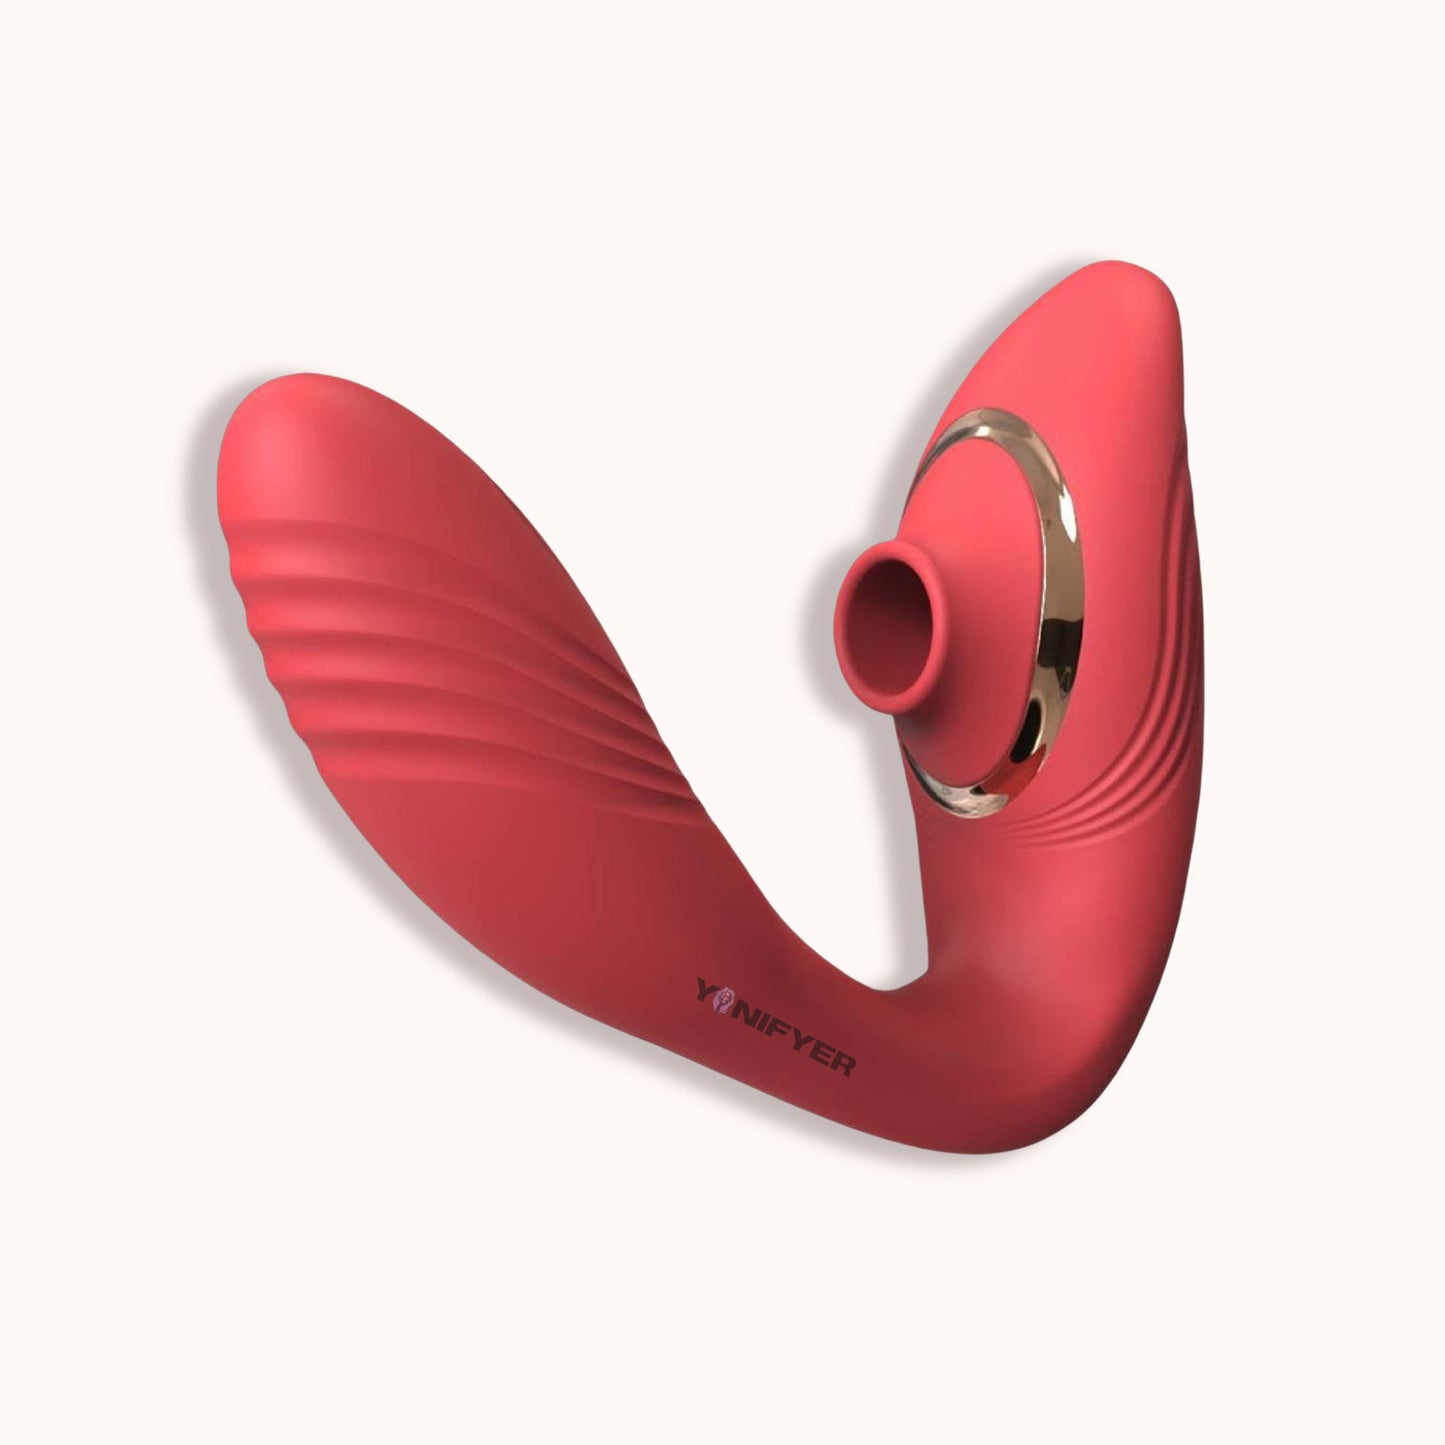 Yonifyer - Yonifyer Luchtdruk Vibrator | Clitoris + G-spot stimulator - Yonifyer